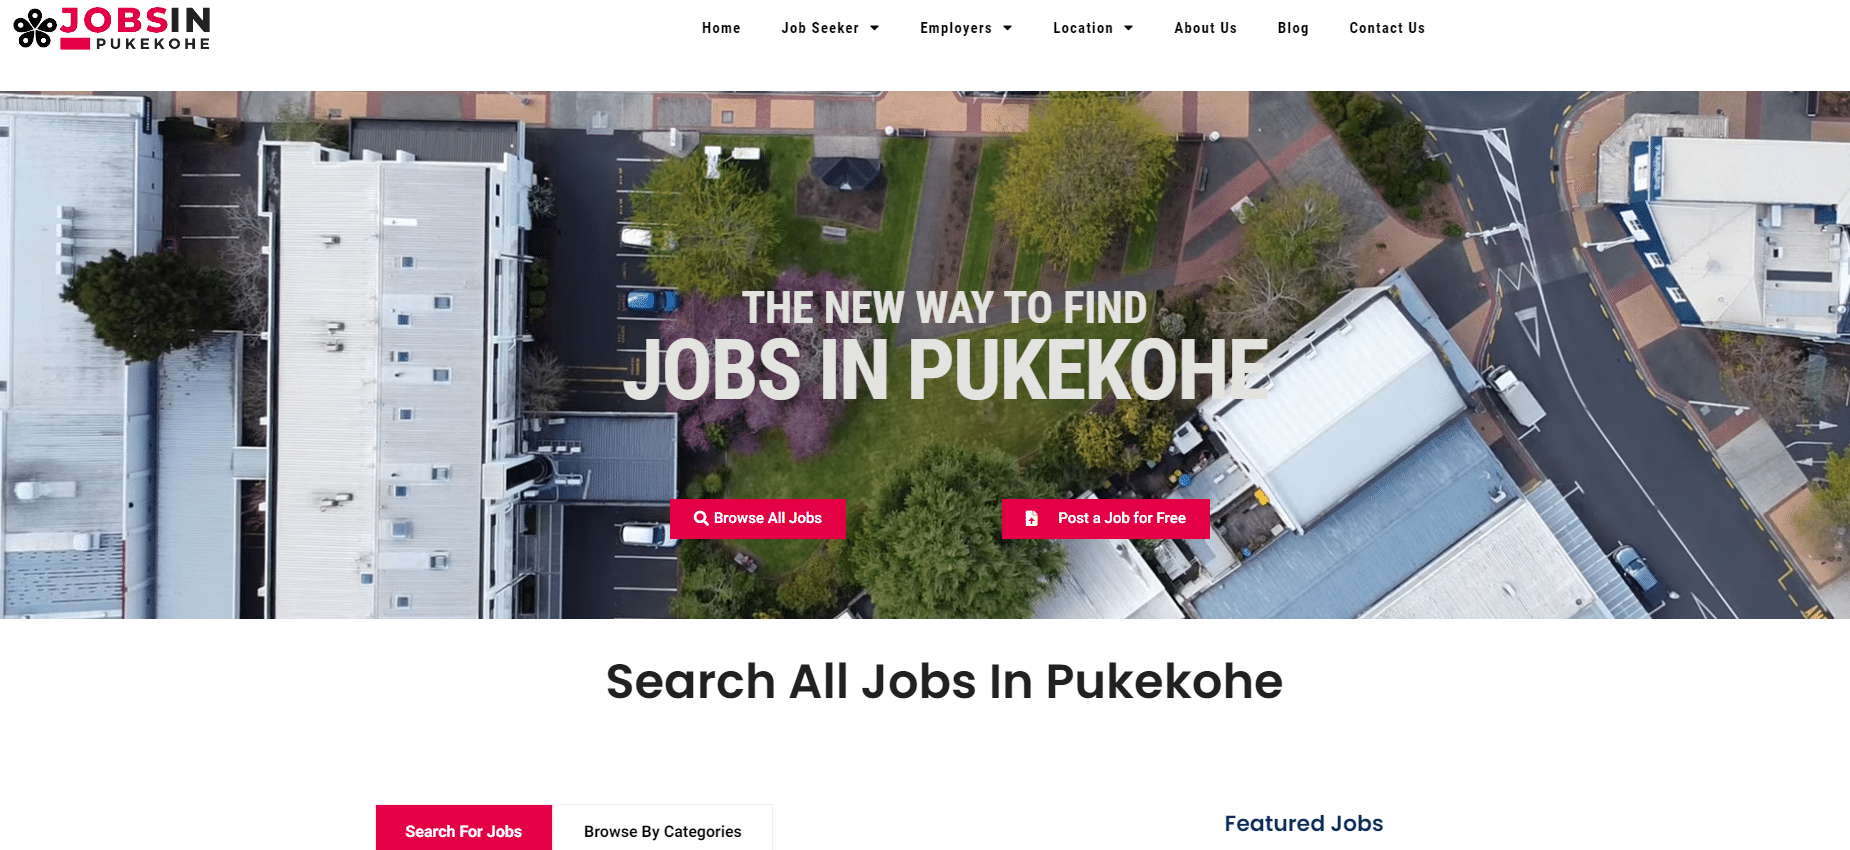 Web Design - Job Site Jobs In